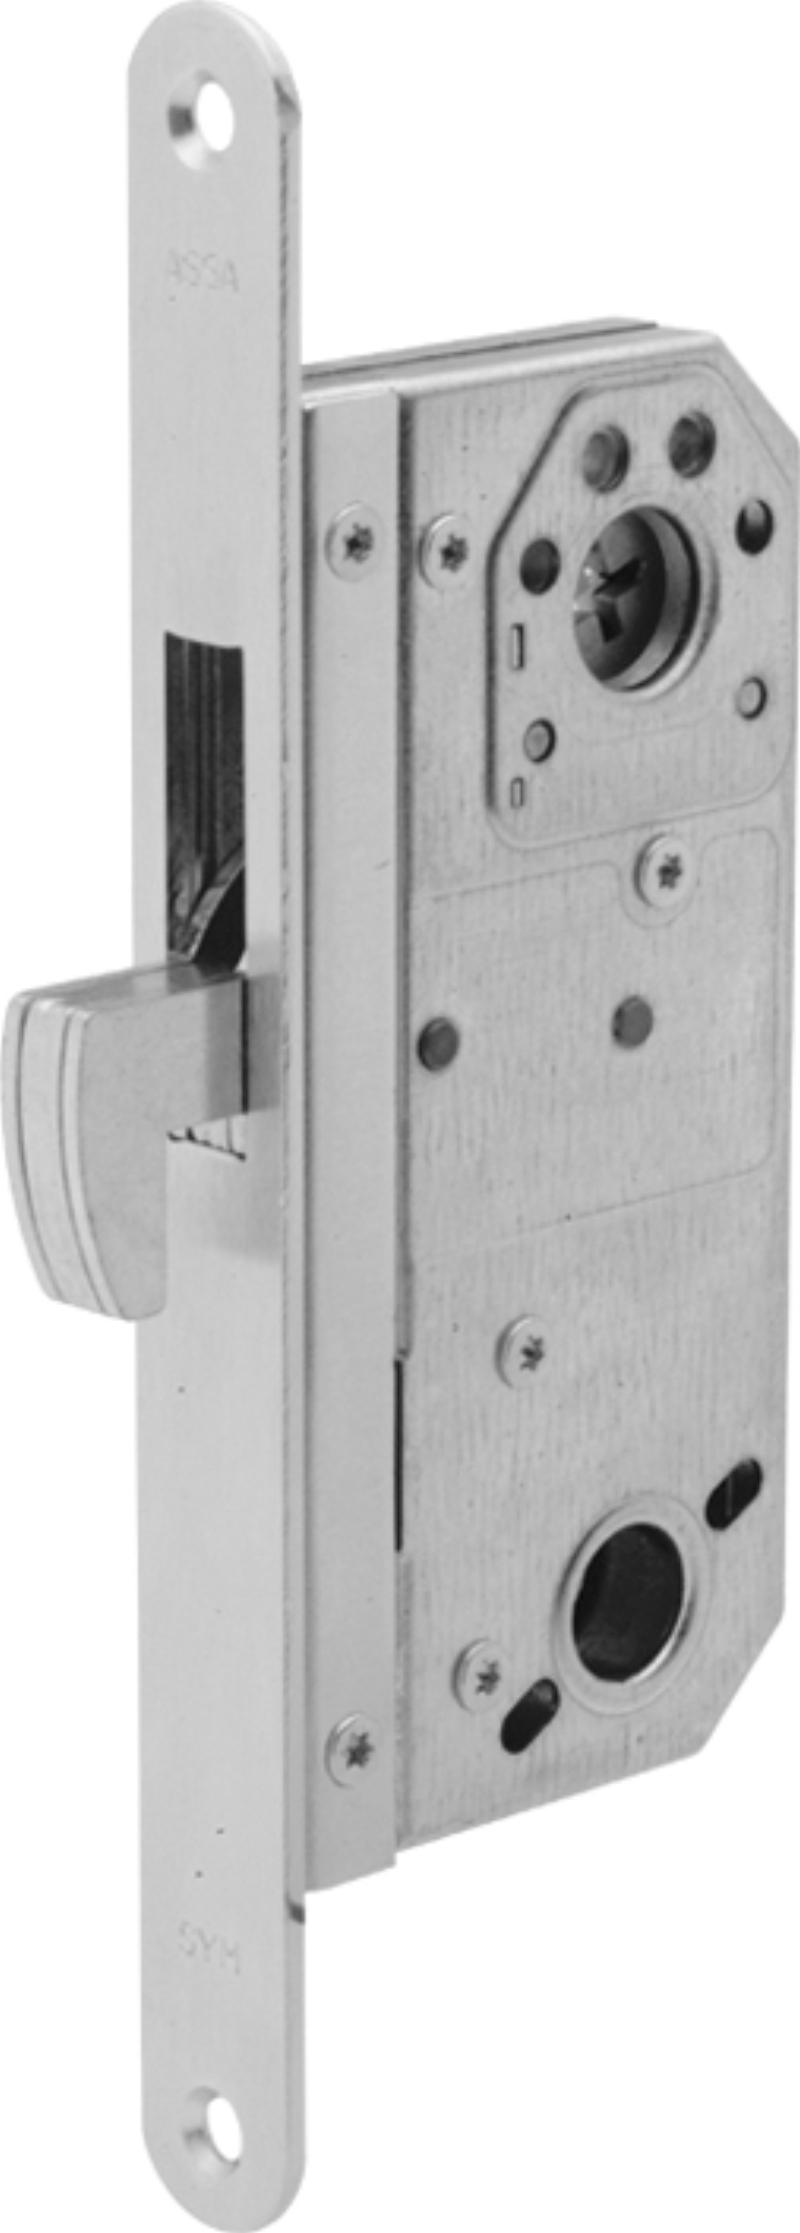 Assa lock case 9787 without tin